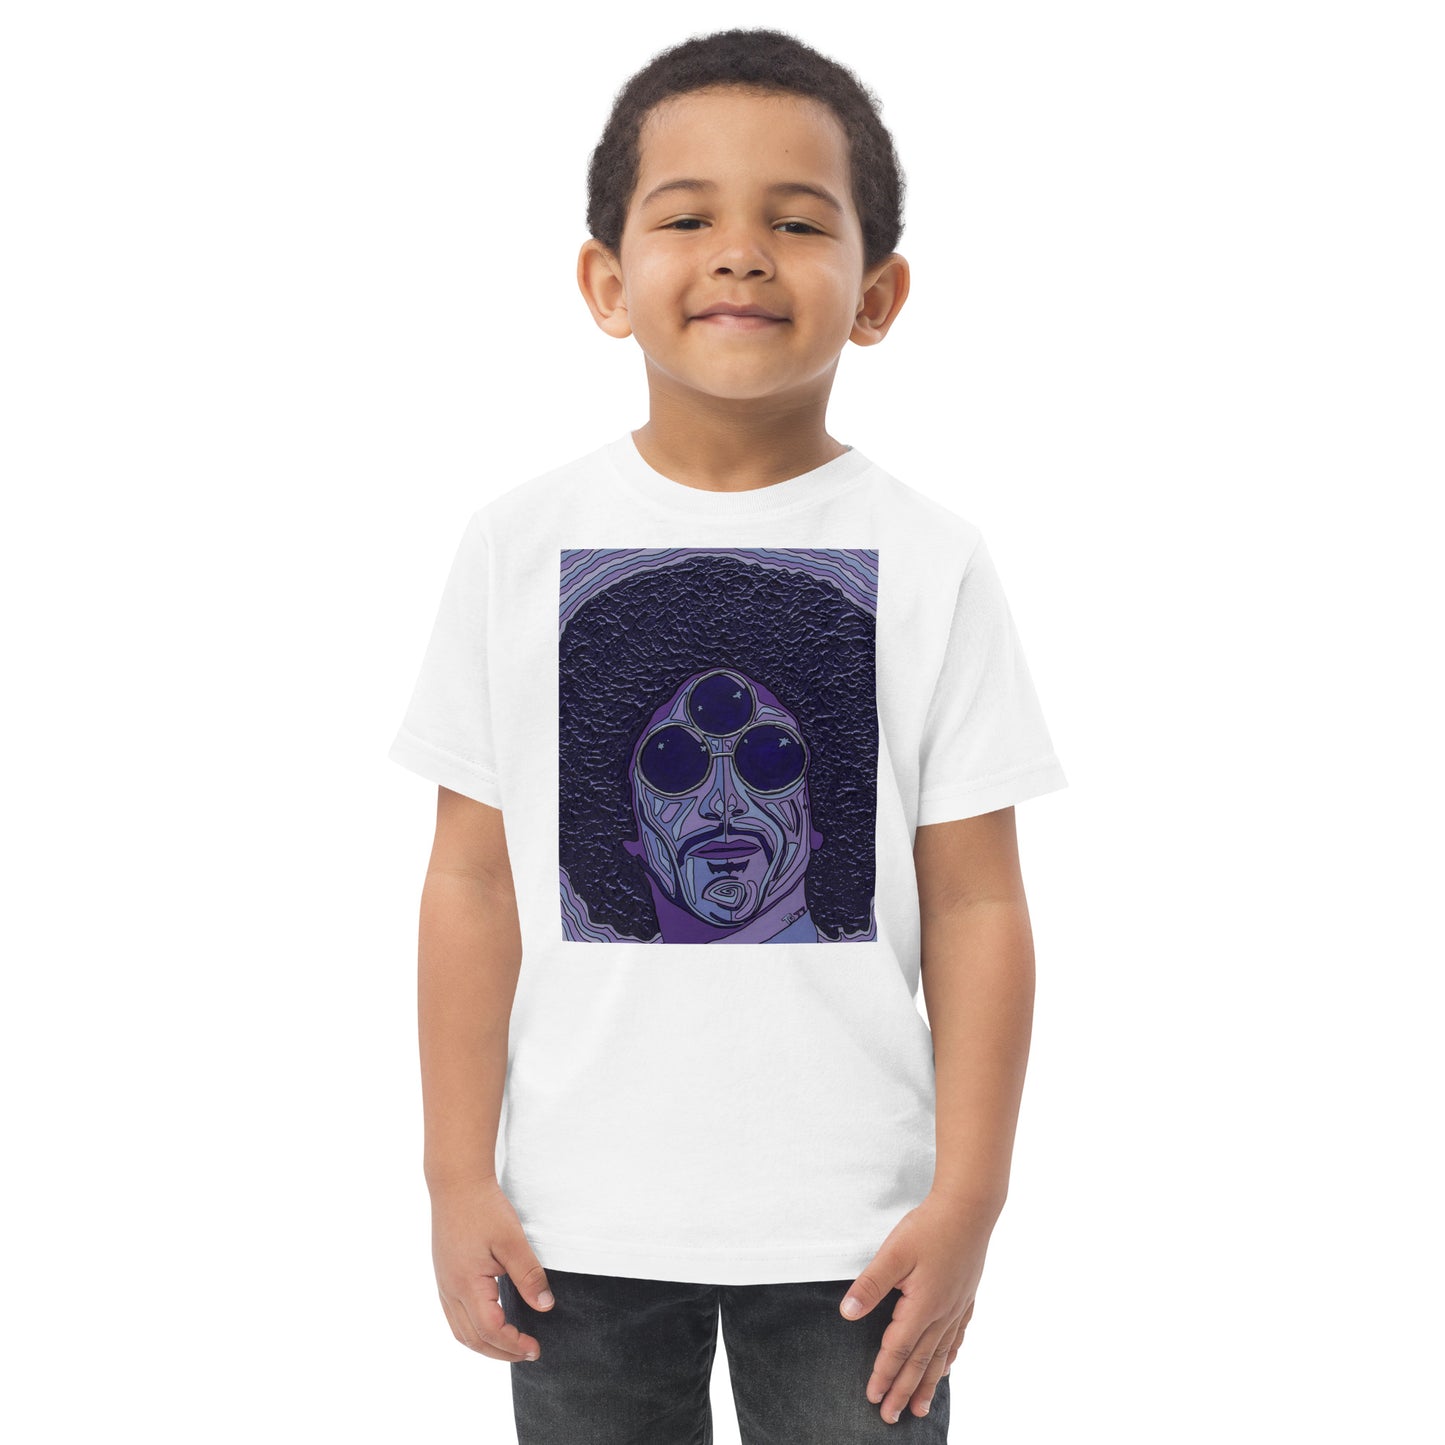 Prince of Funk - Toddler jersey t-shirt